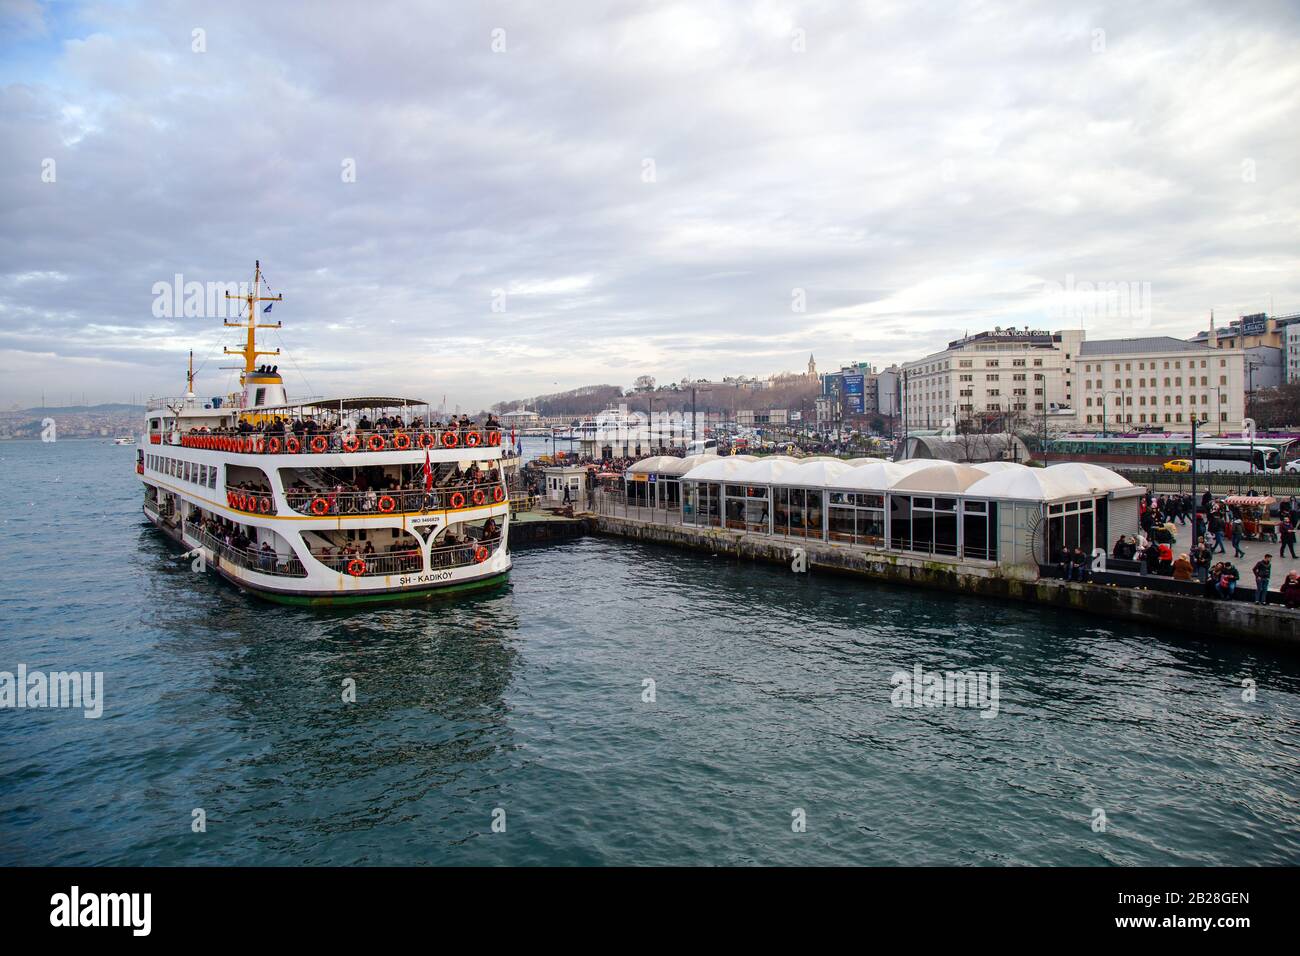 Eminonu, Istanbul / Turkey - 01/20/2017: A view from the Eminonu ferry port in Istanbul, Turkey. Stock Photo